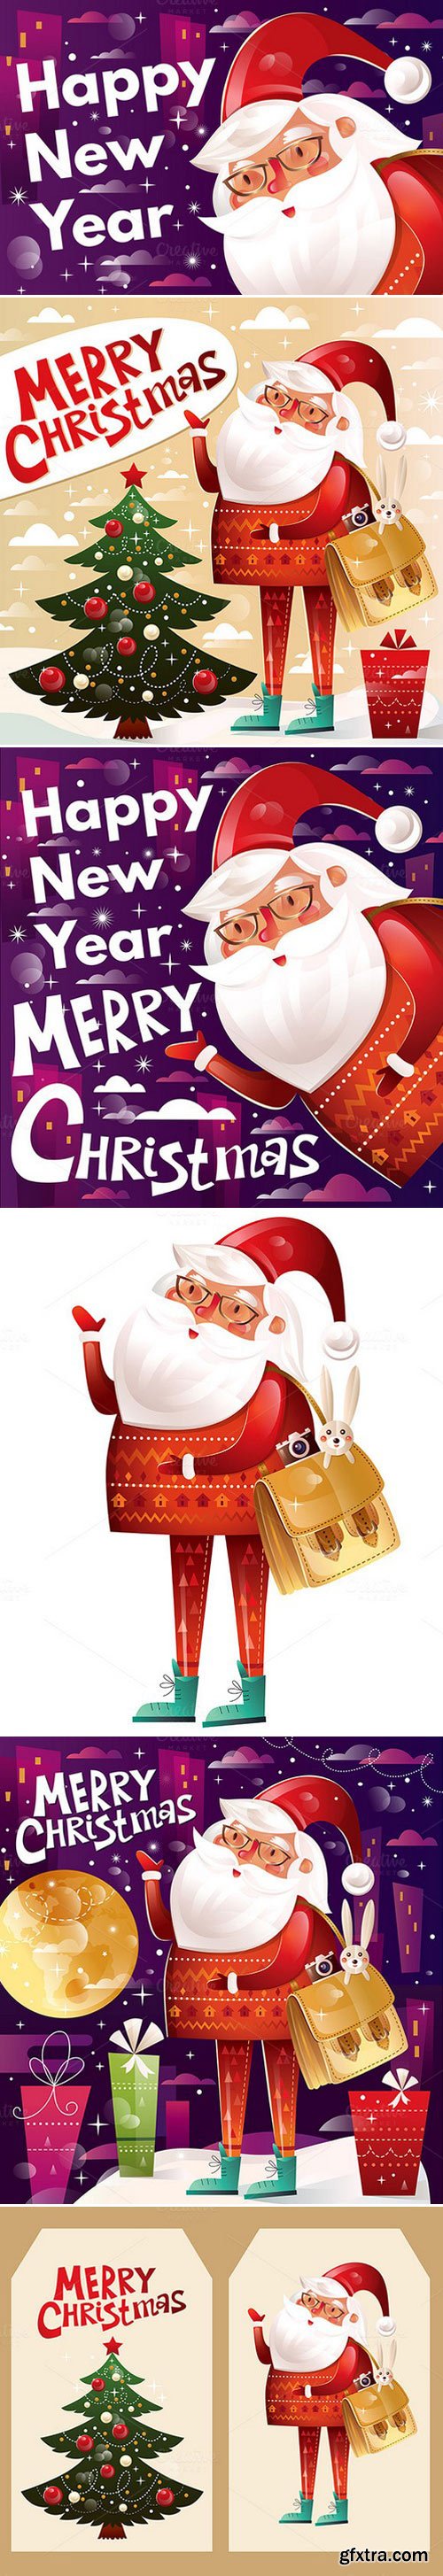 CM - Christmas illustrations with Santa 450682